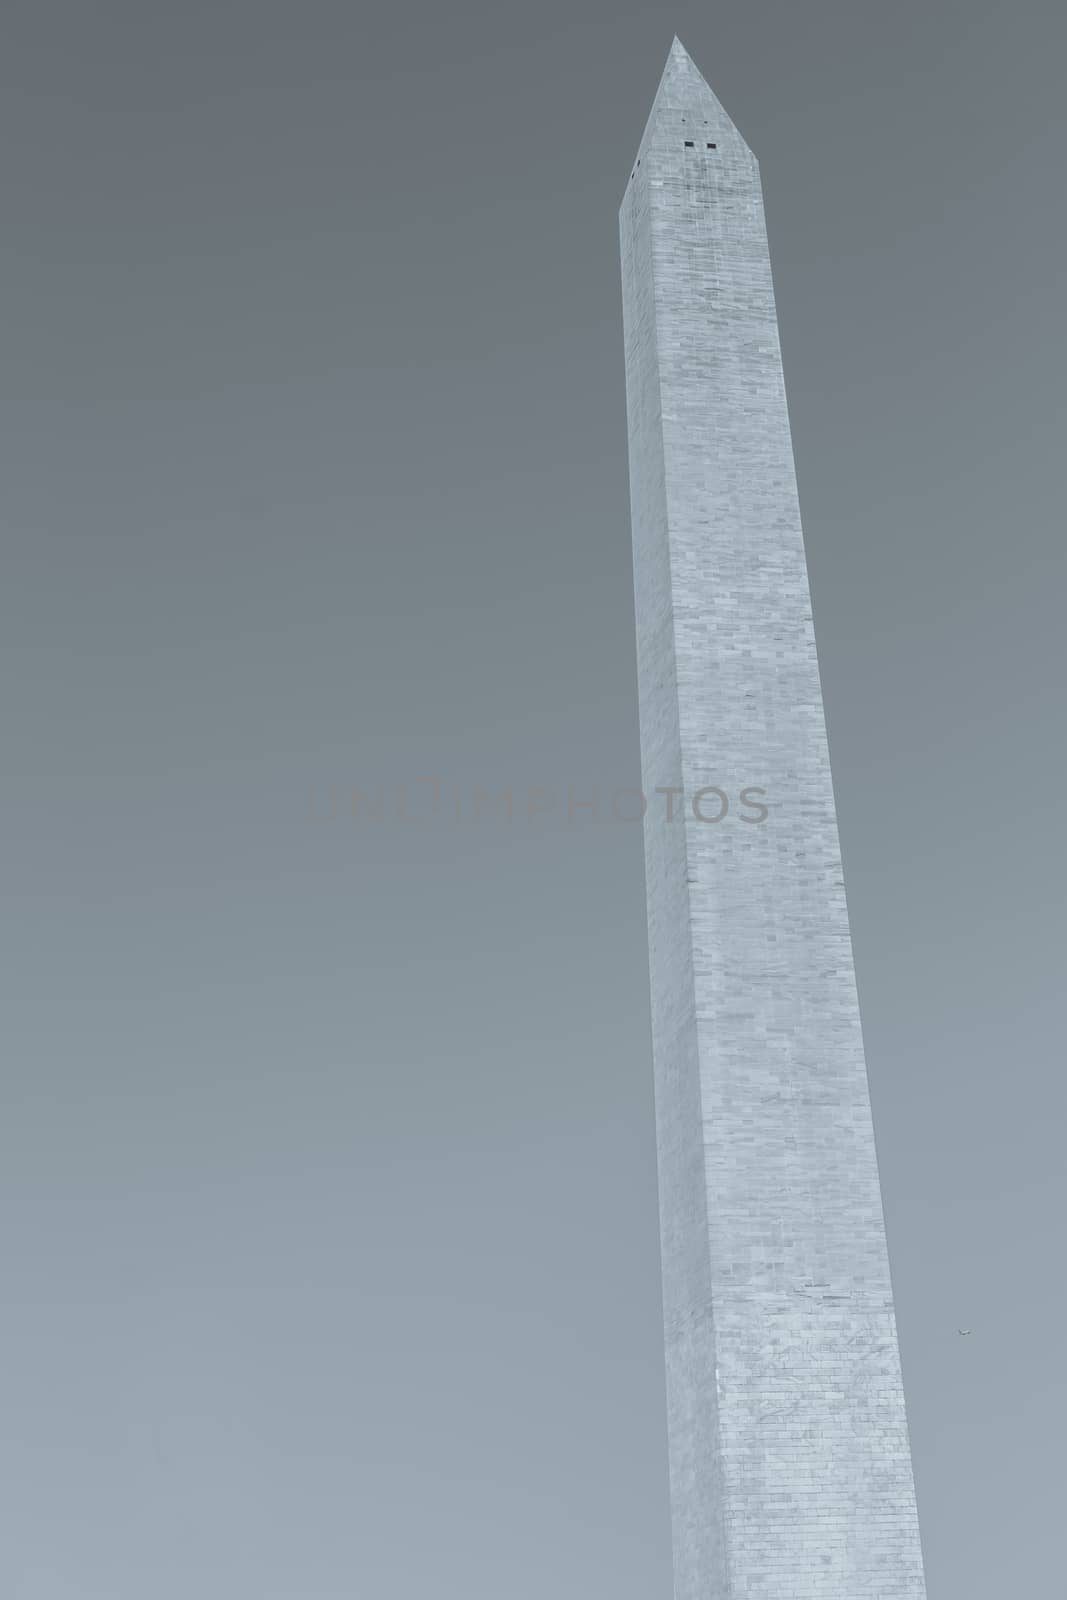 Washington Monument tall obelisk in National Mall Washington DC commorating George Washington, USA.